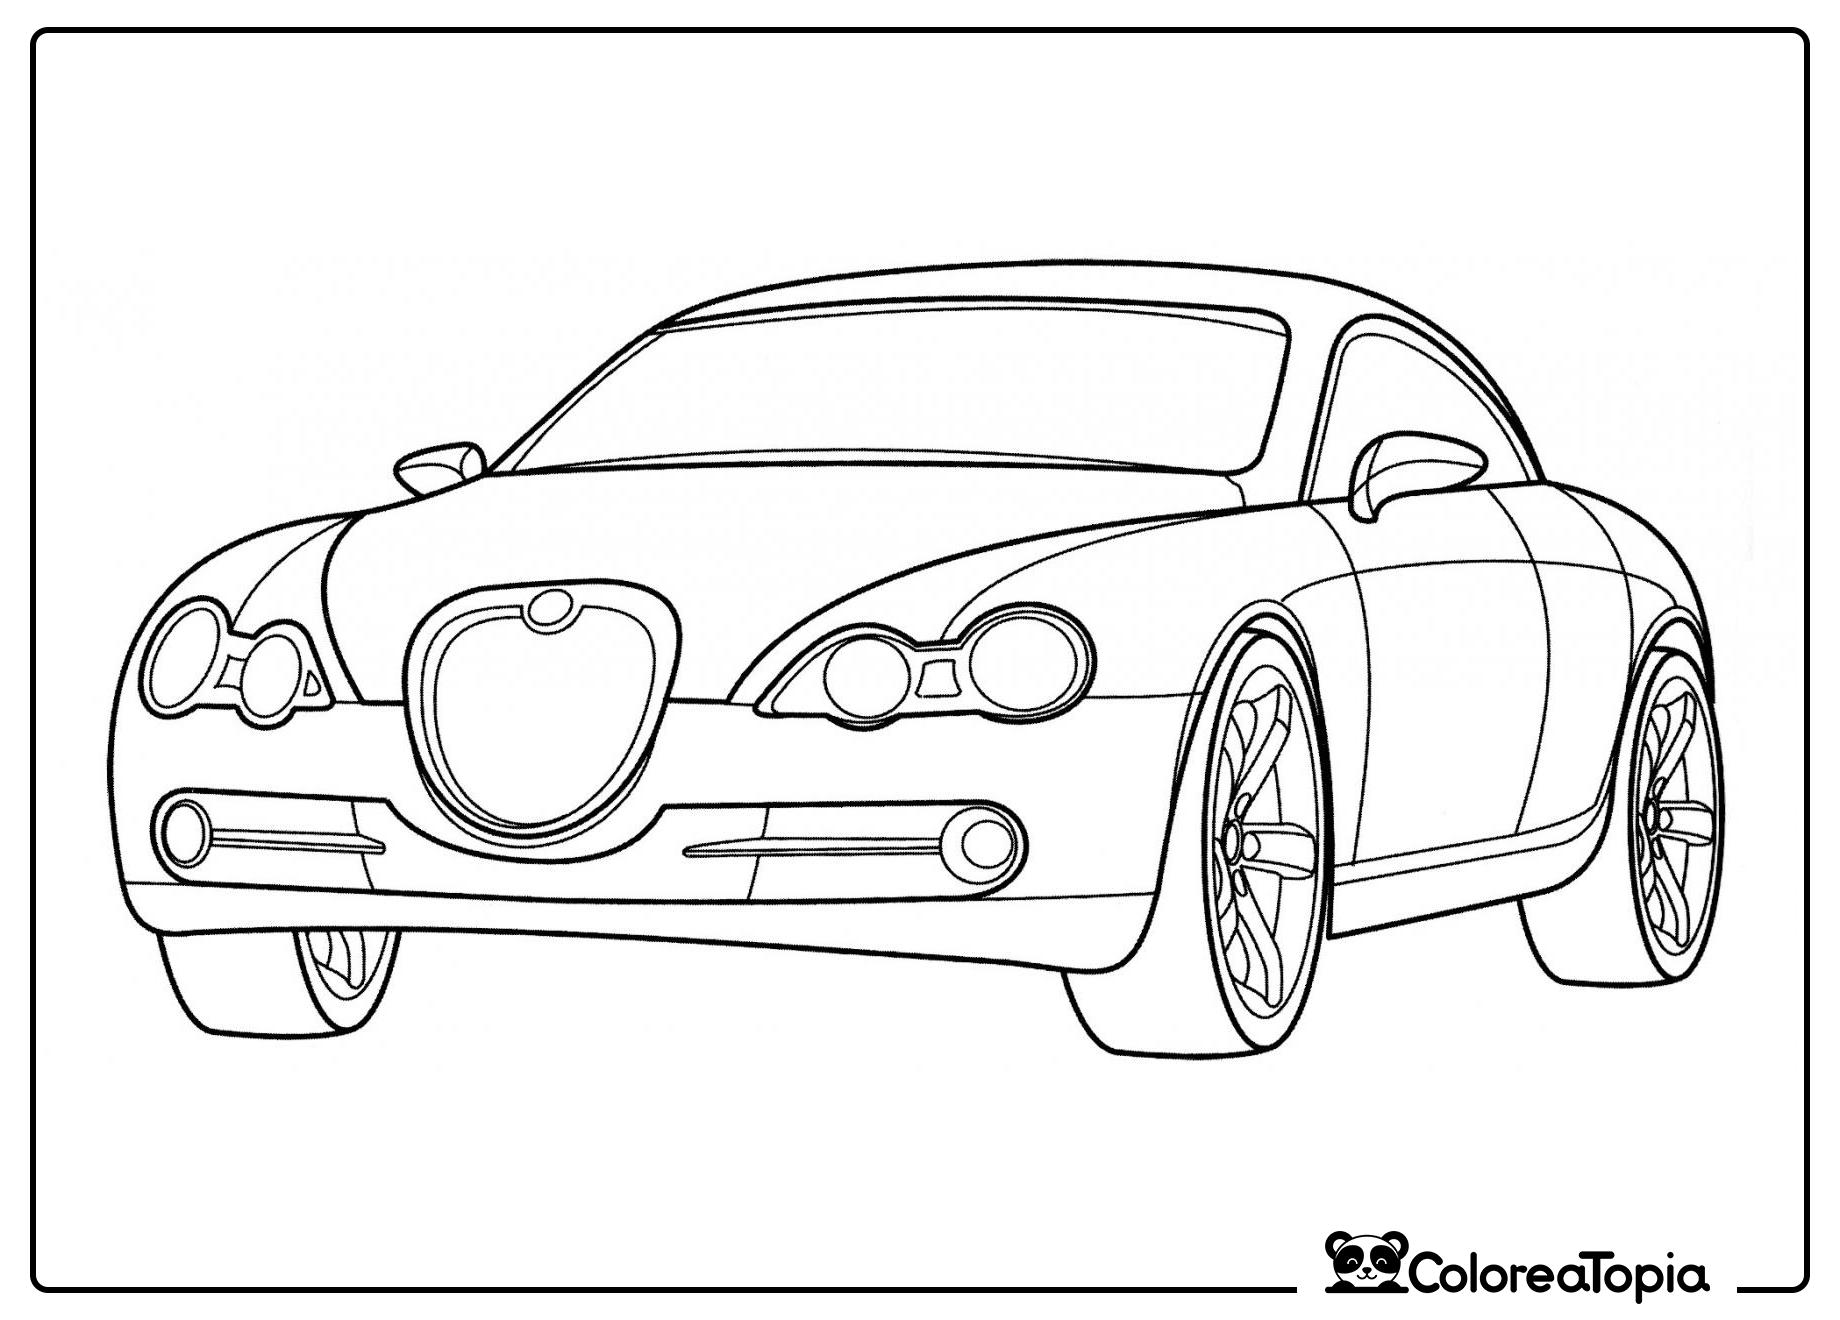 Jaguar R-D6 - dibujo para colorear